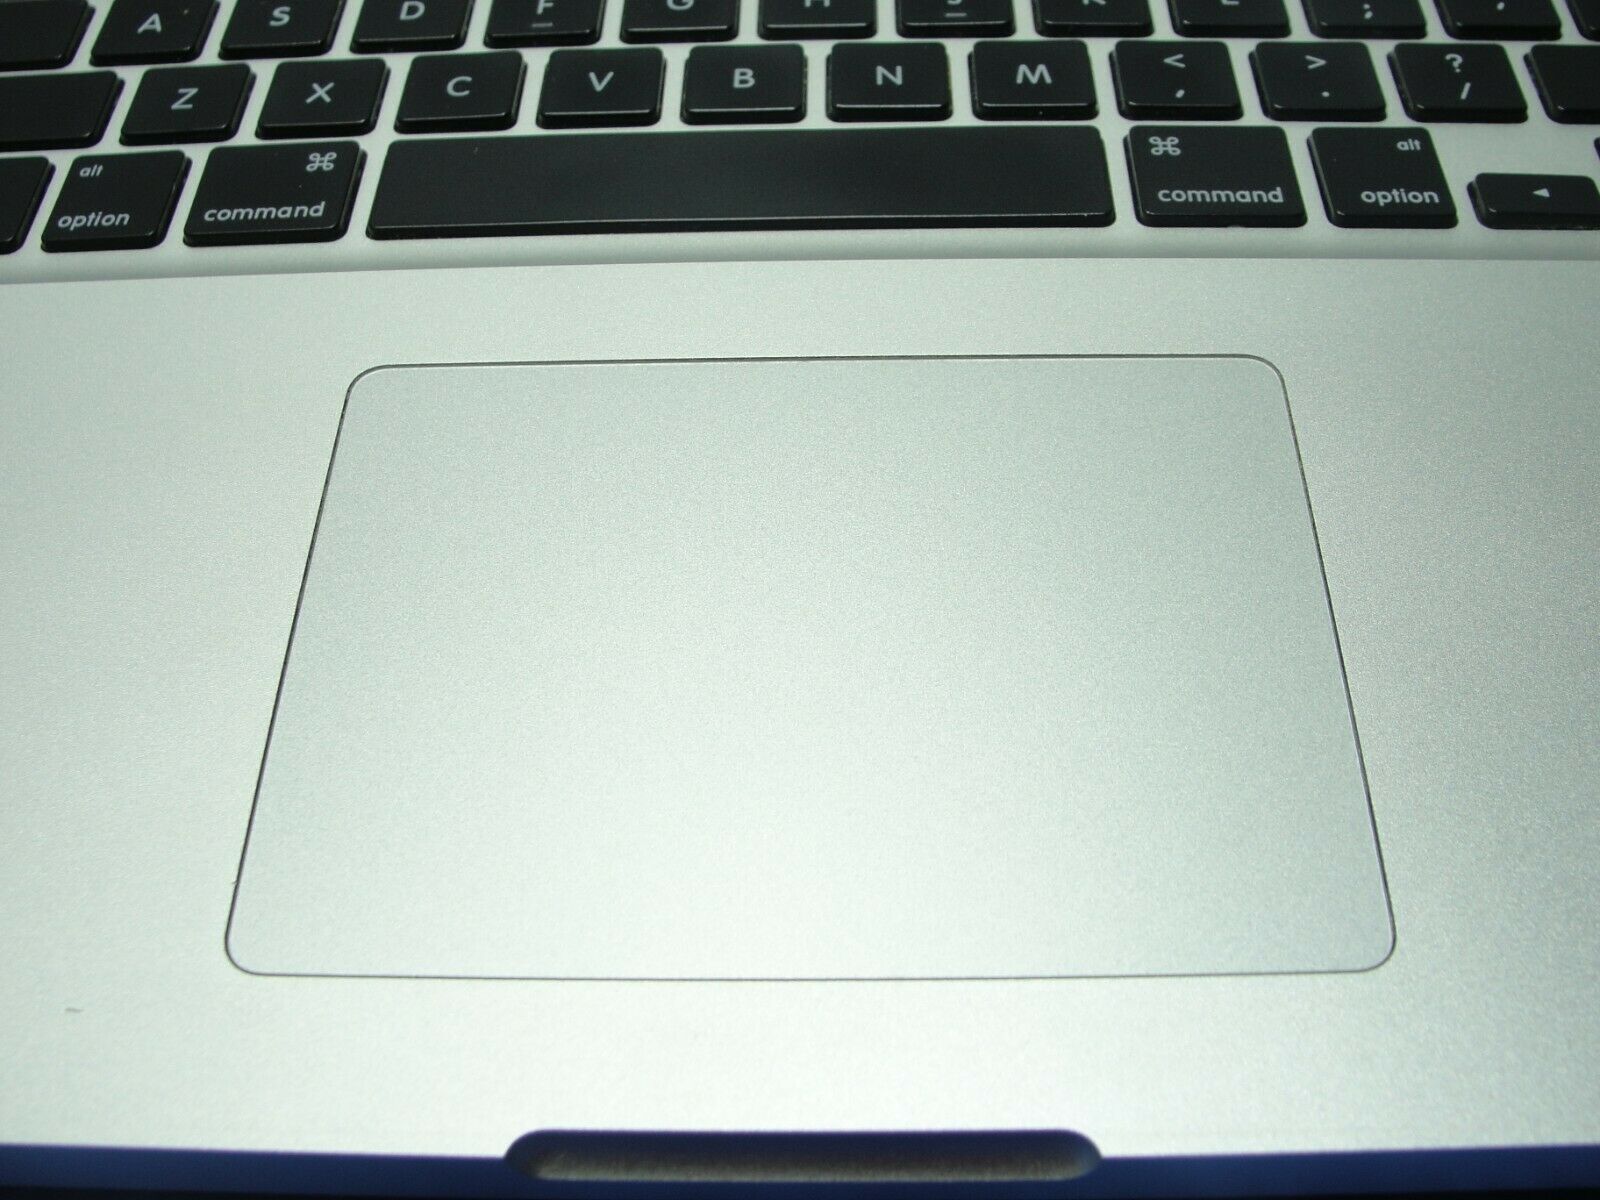 MacBook Pro A1286 MD322LL/A Late 2011 15